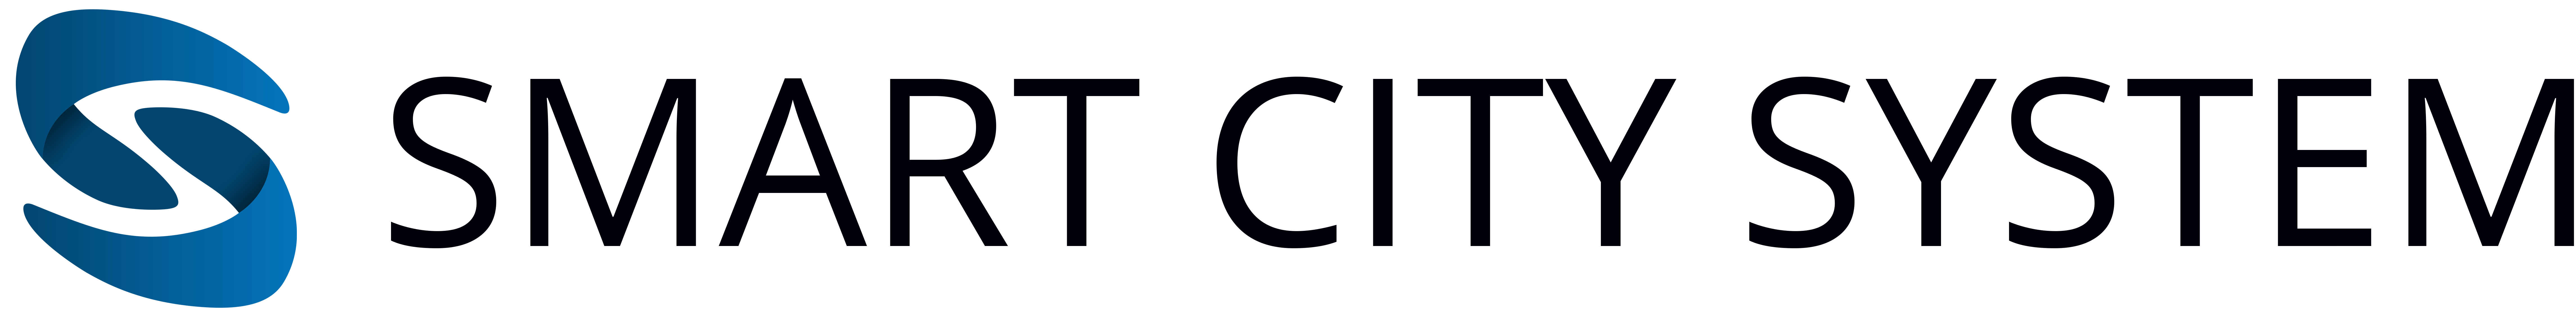 SCS Logo horizontal